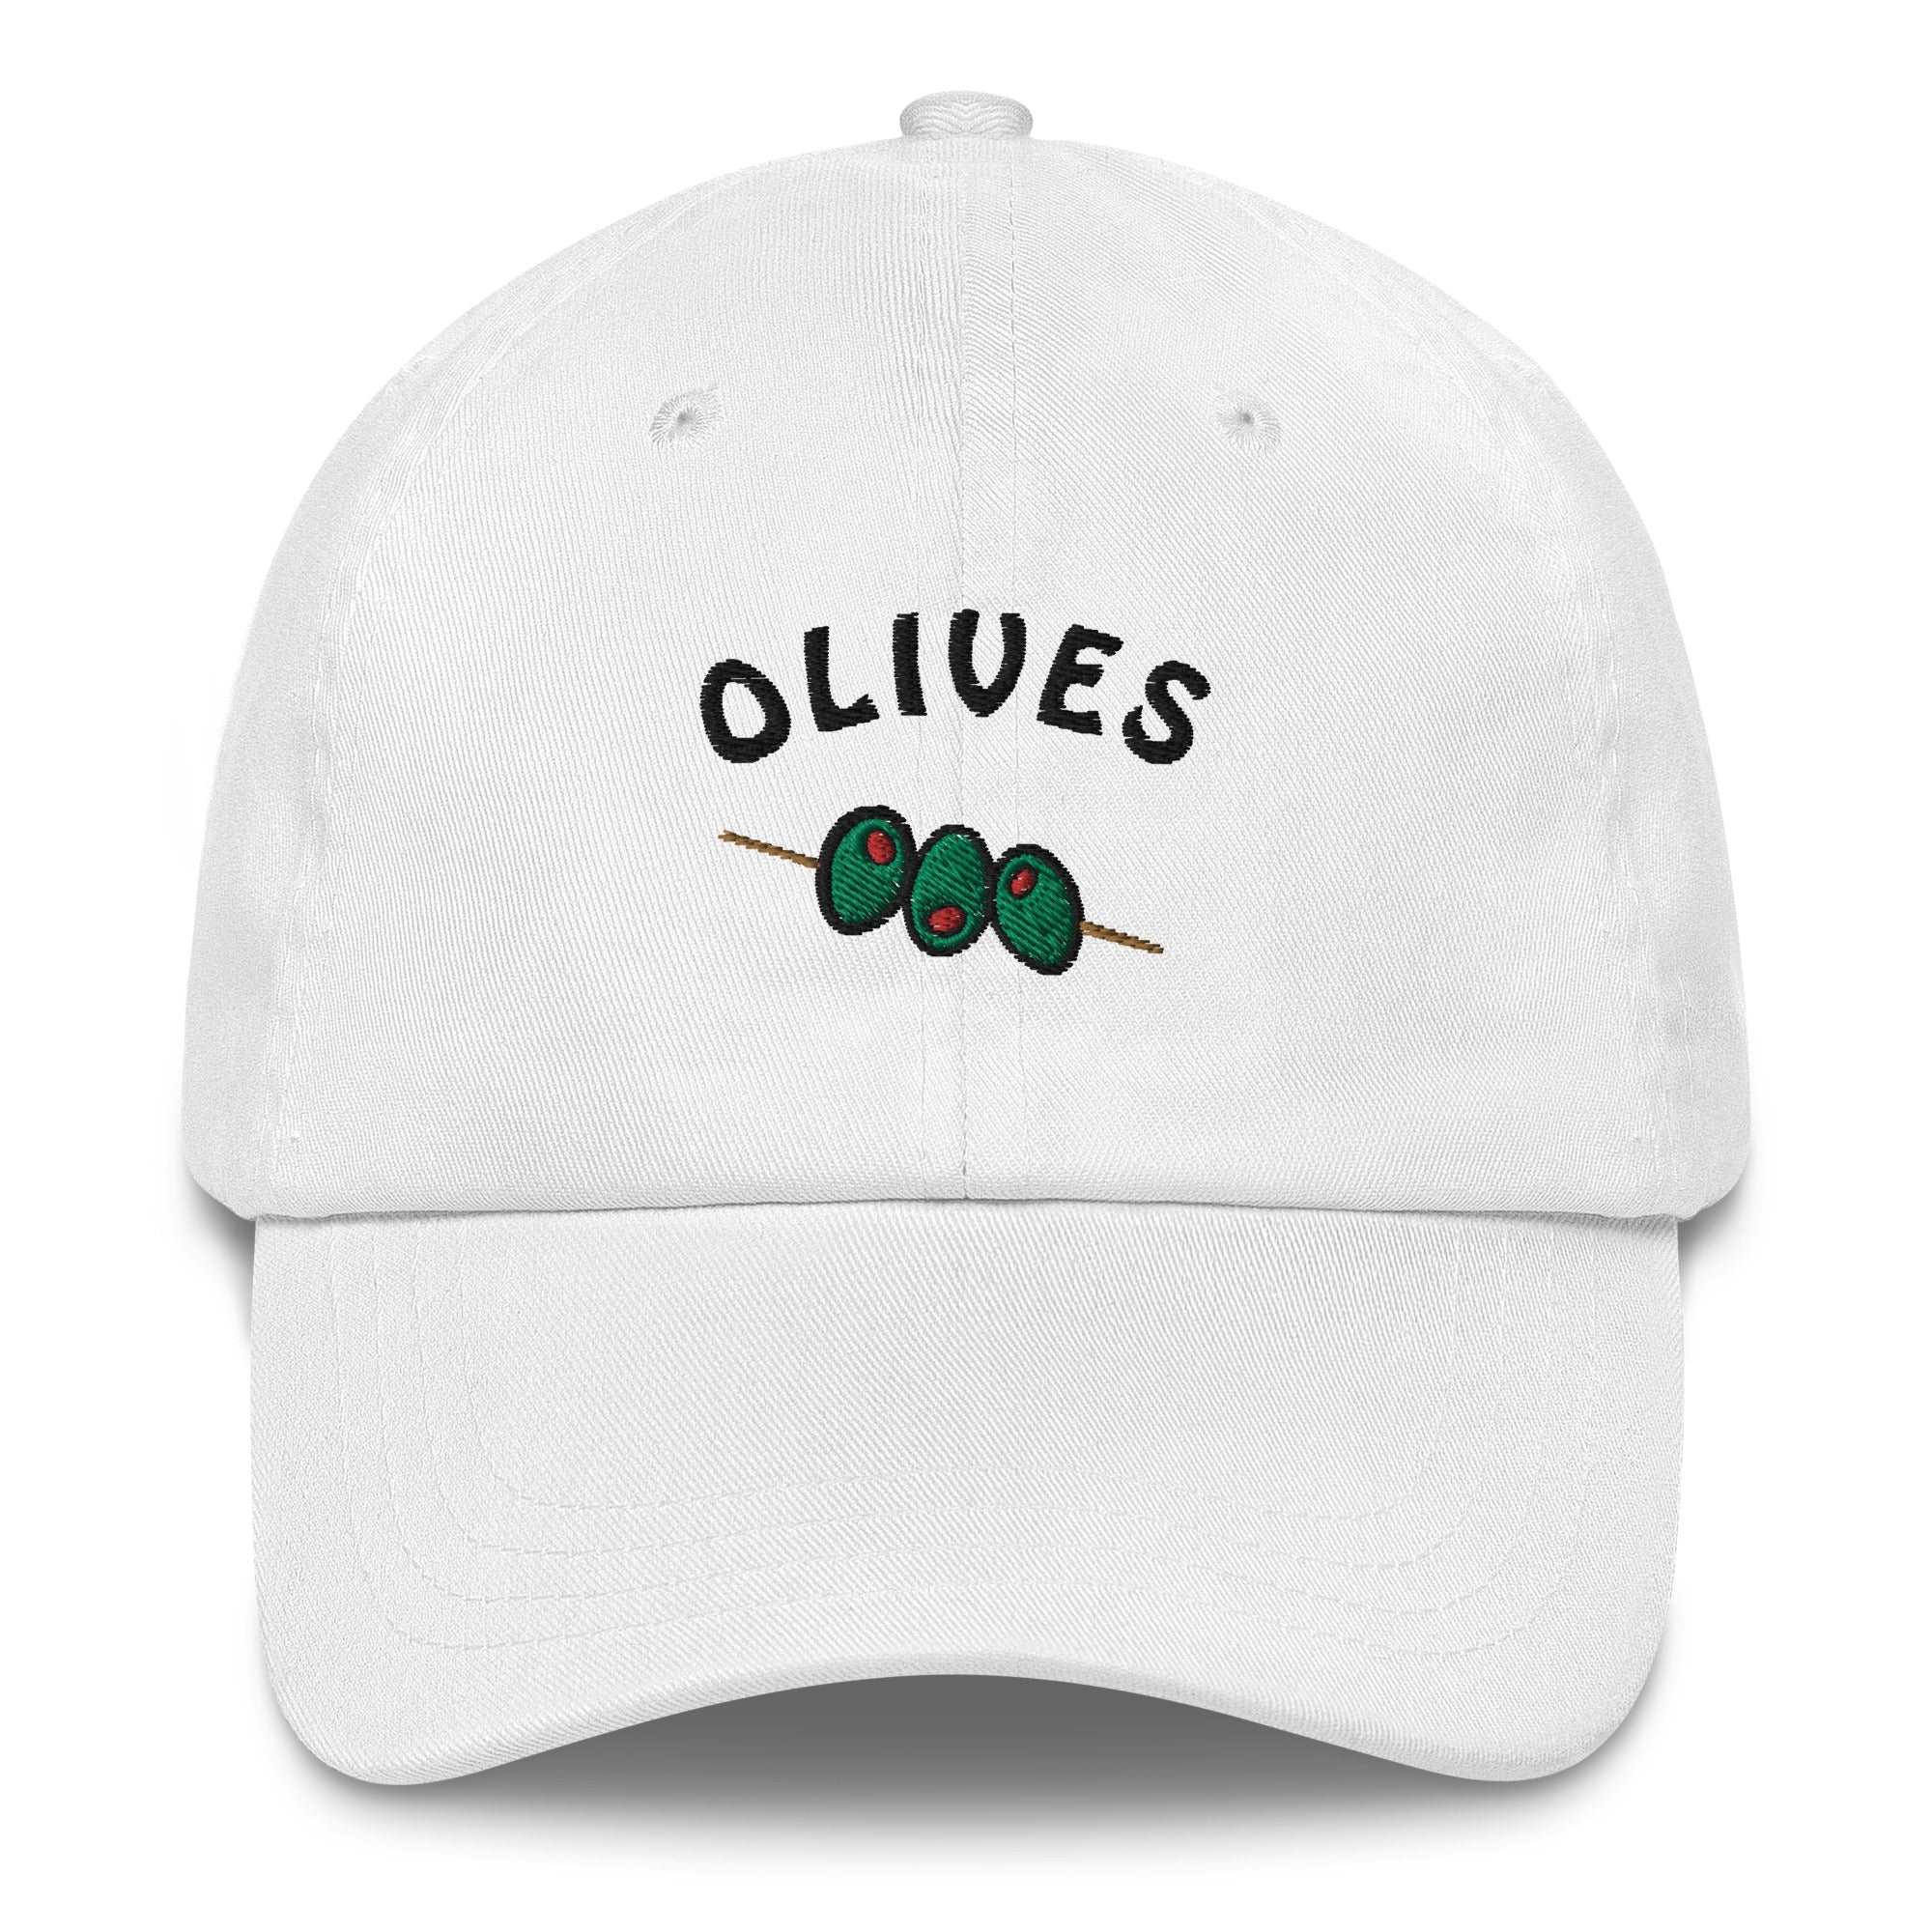 Olives - Cap